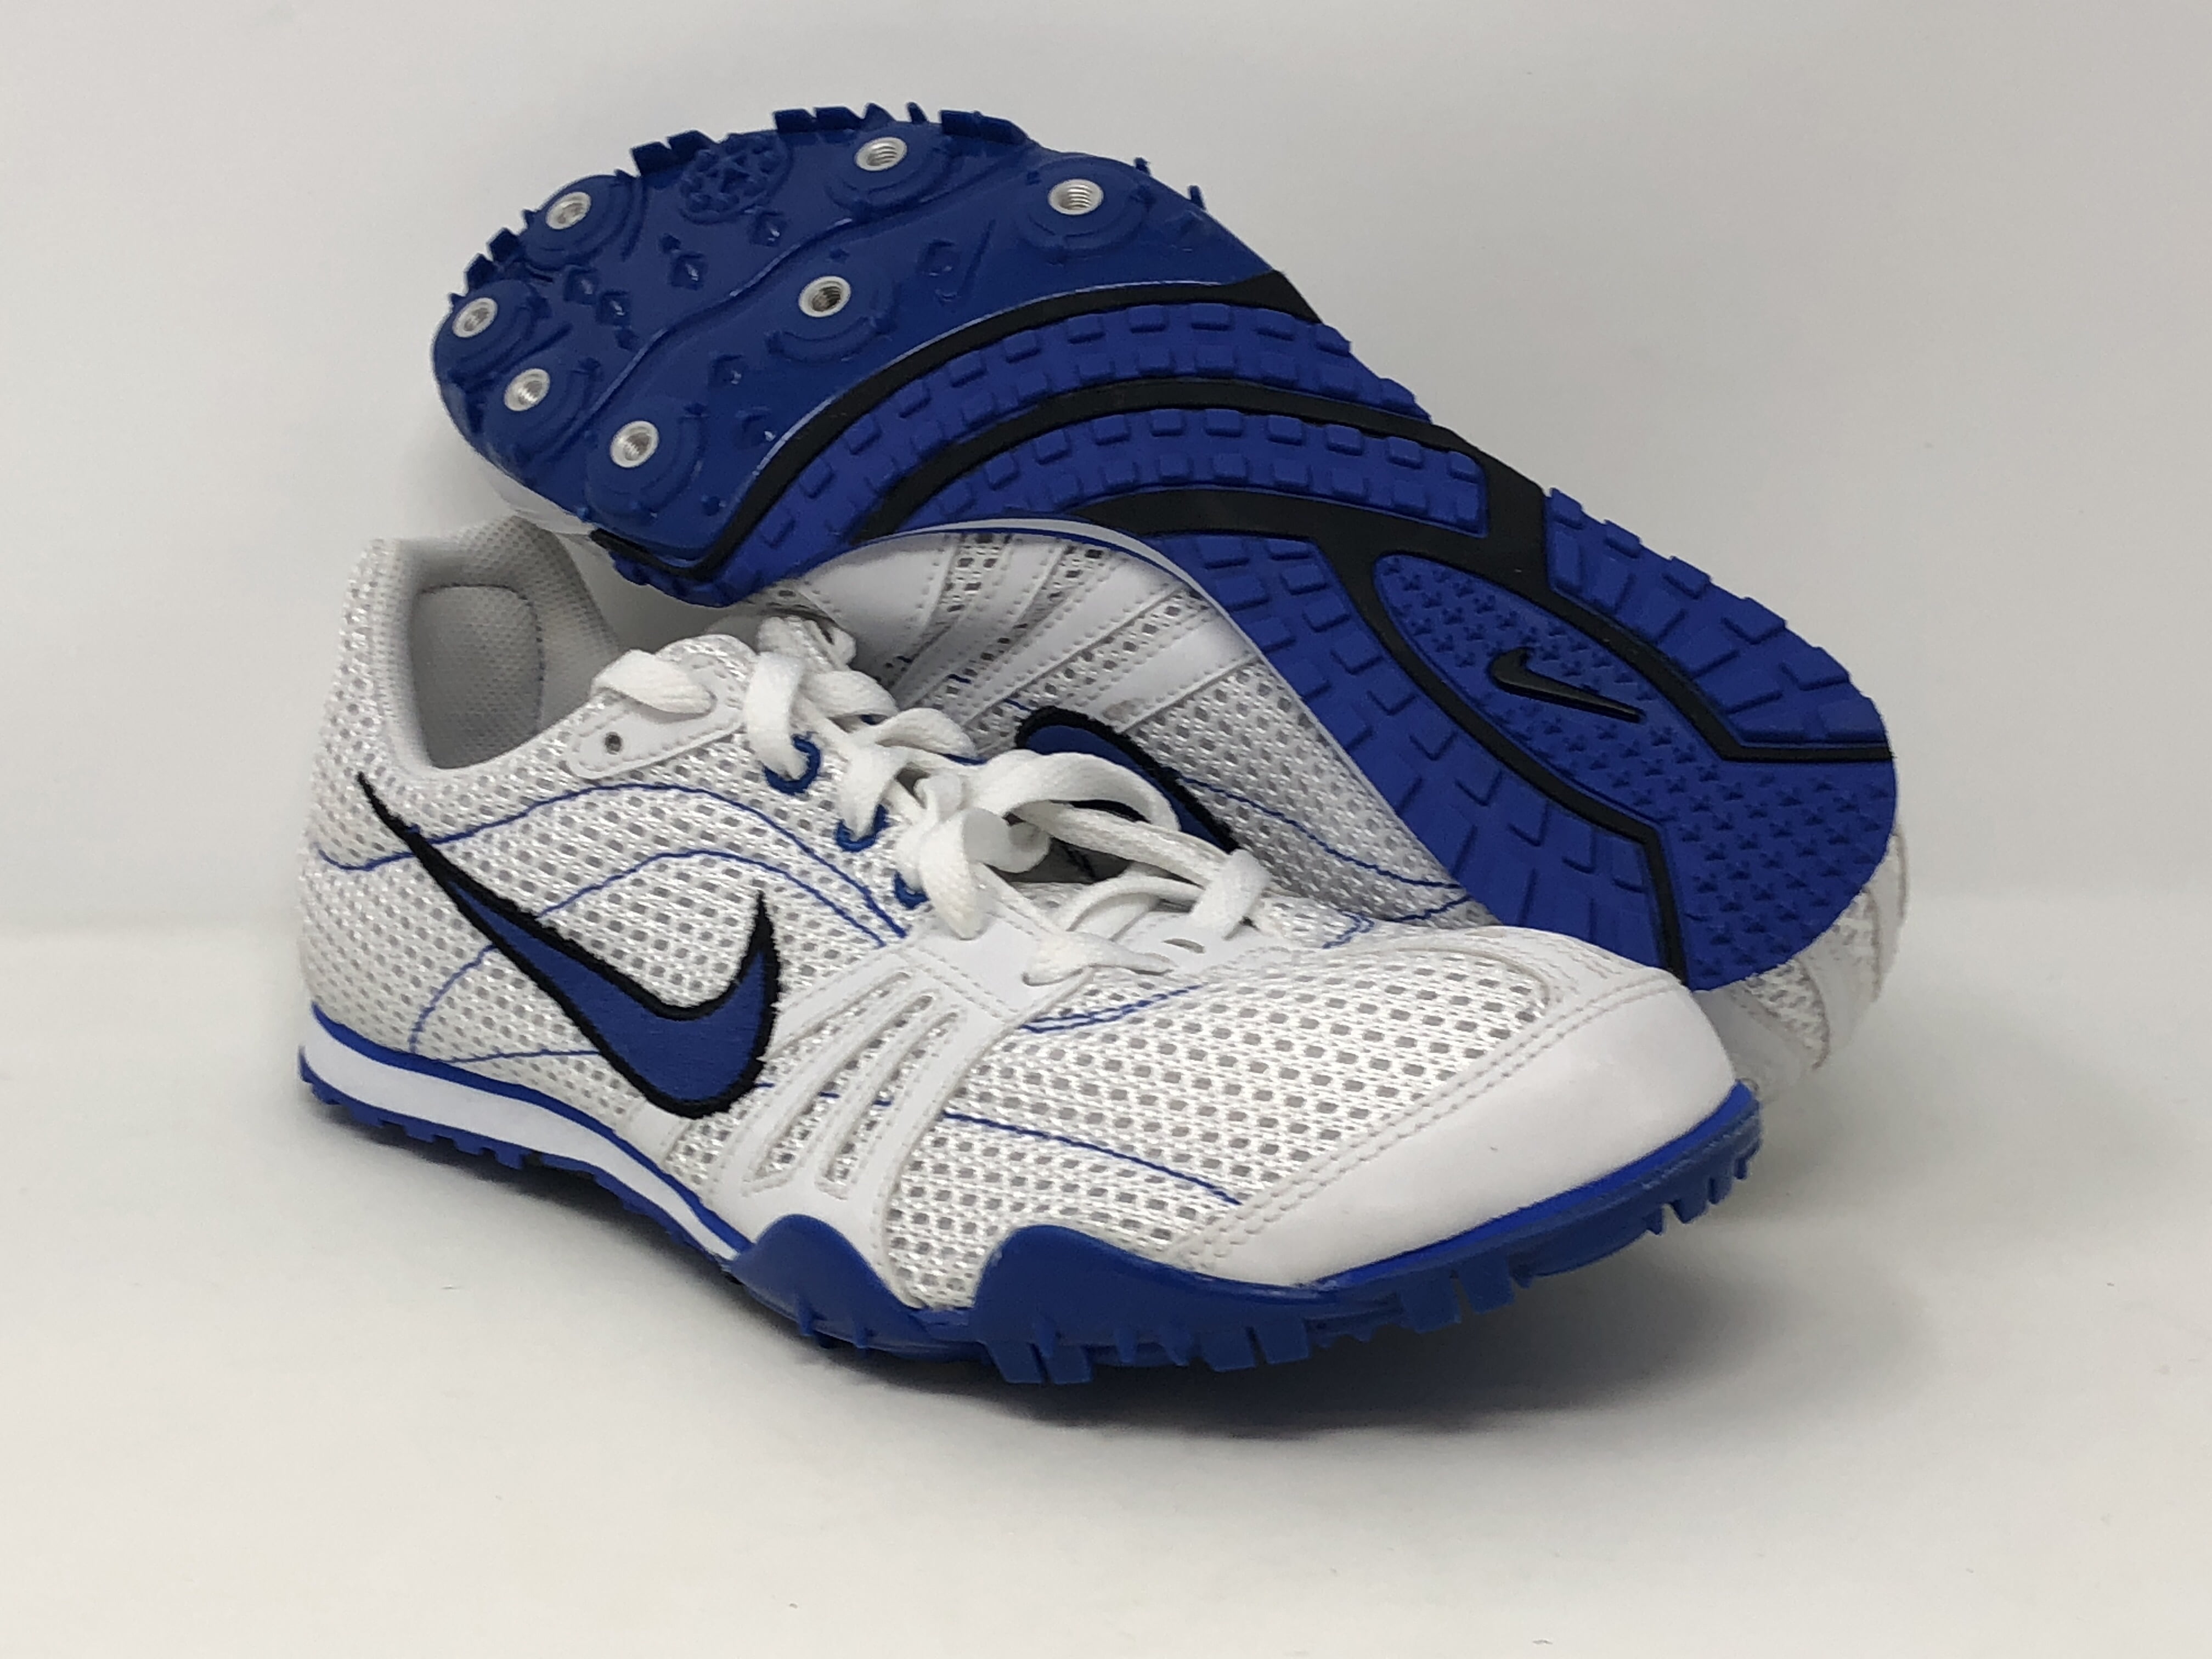 Enojado Permanecer frío Nike Men's Rival D Plus III Running Shoe, White/Varsity Royal/Black, 9 D US  - Walmart.com